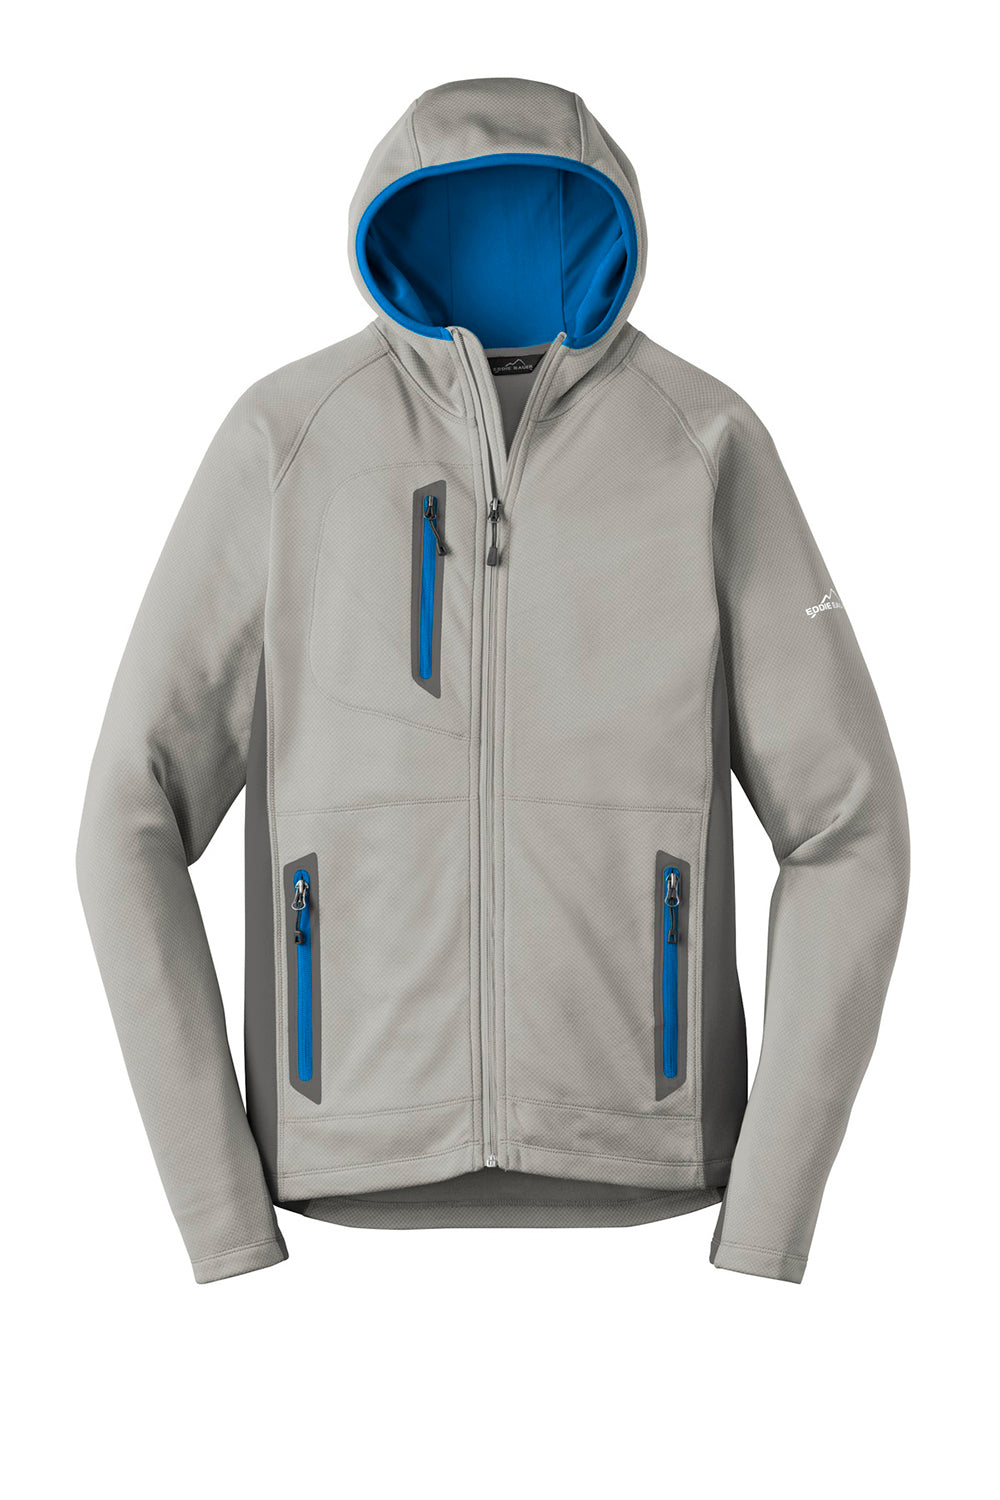 Eddie Bauer EB244 Mens Sport Pill Resistant Fleece Full Zip Hooded Jacket Cloud Grey Flat Front